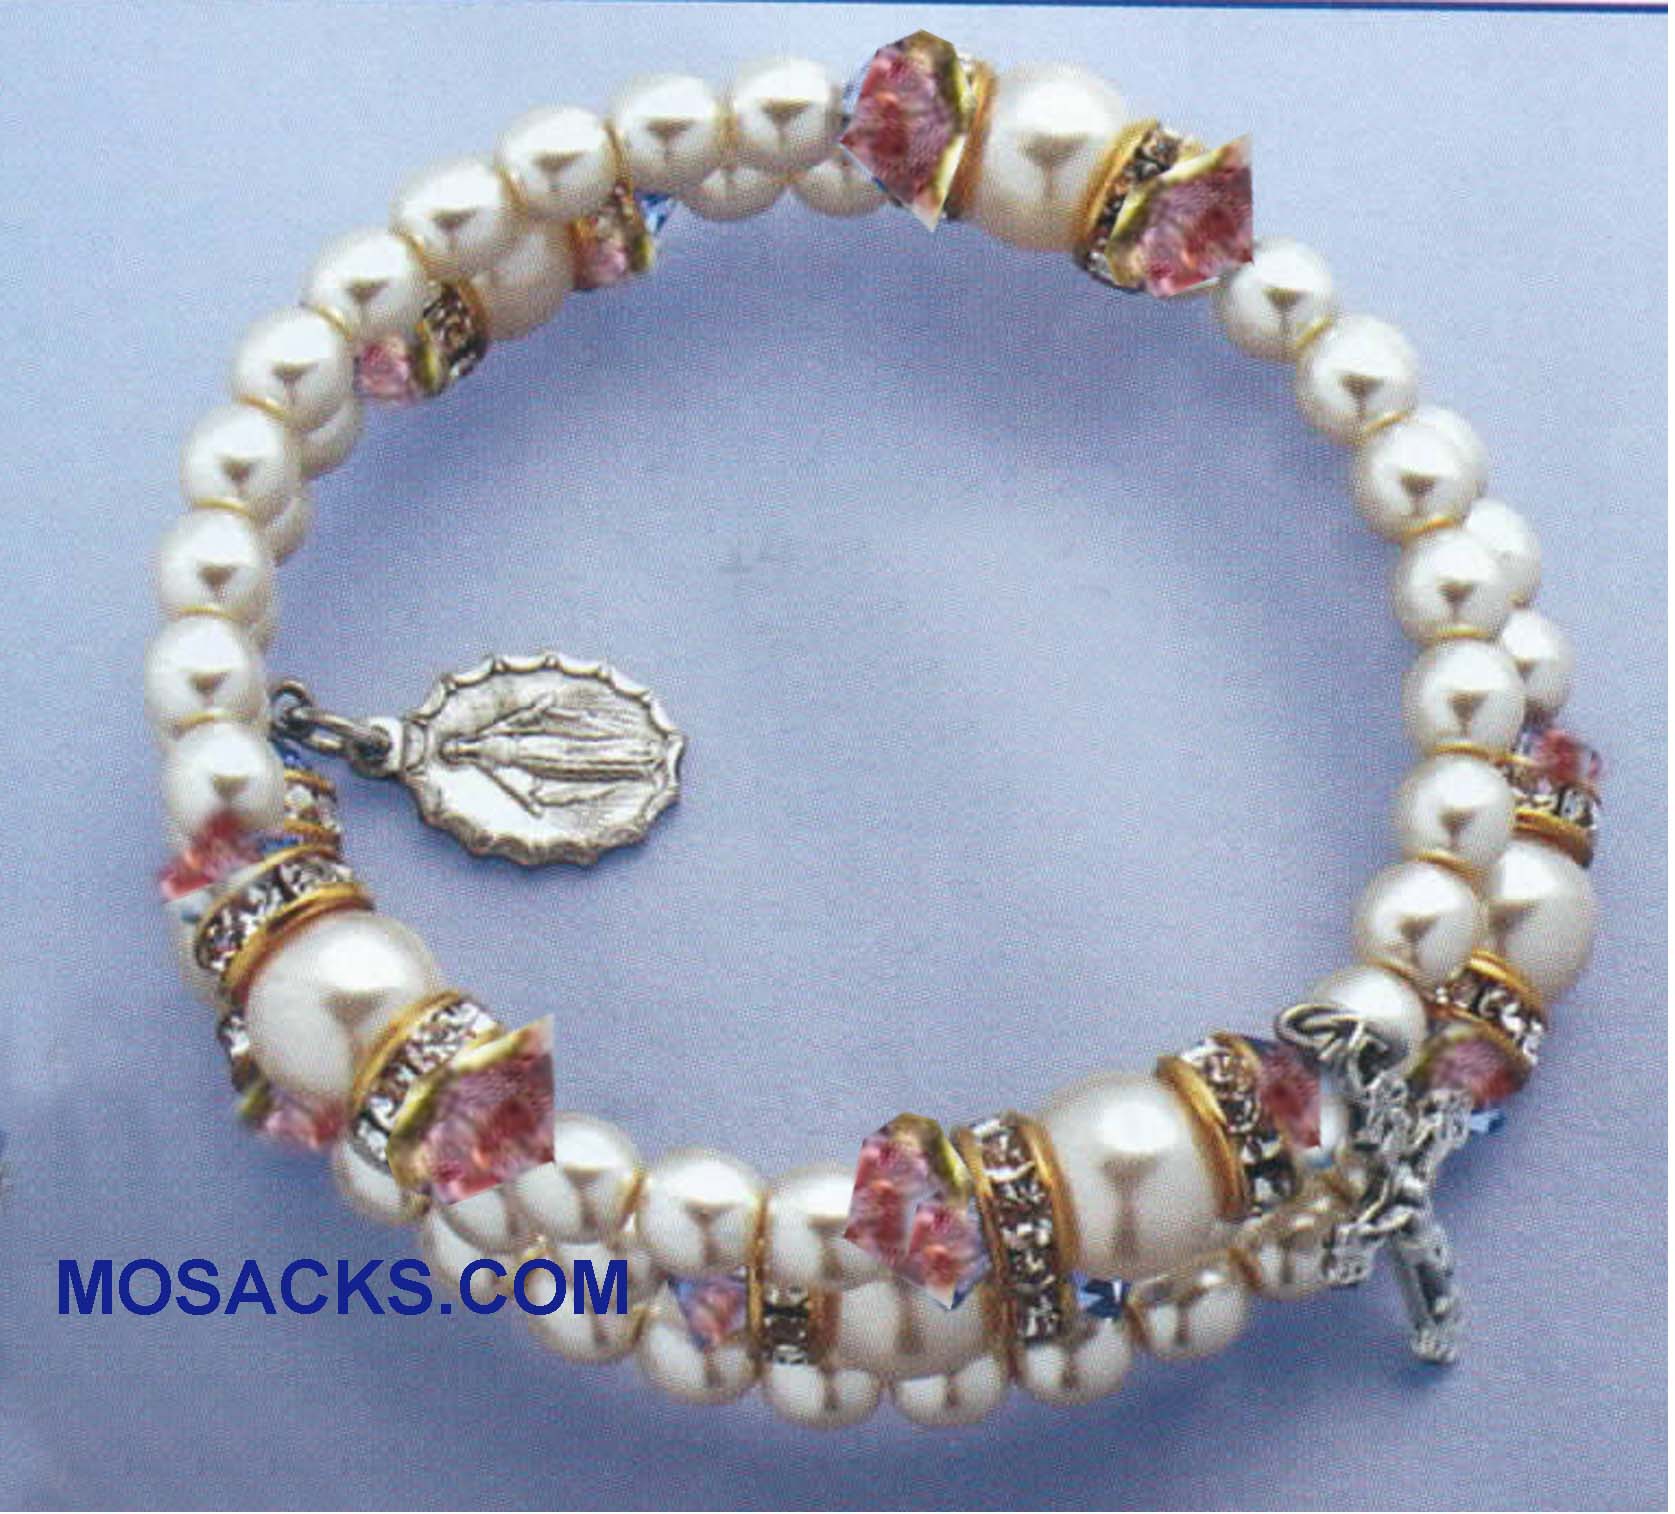 Birthstone Rosary Bracelet Rosary Spiral Bracelet Light Amethyst -14298LA Light Amethyst June Birthstone Rosary Wrap Bracelet